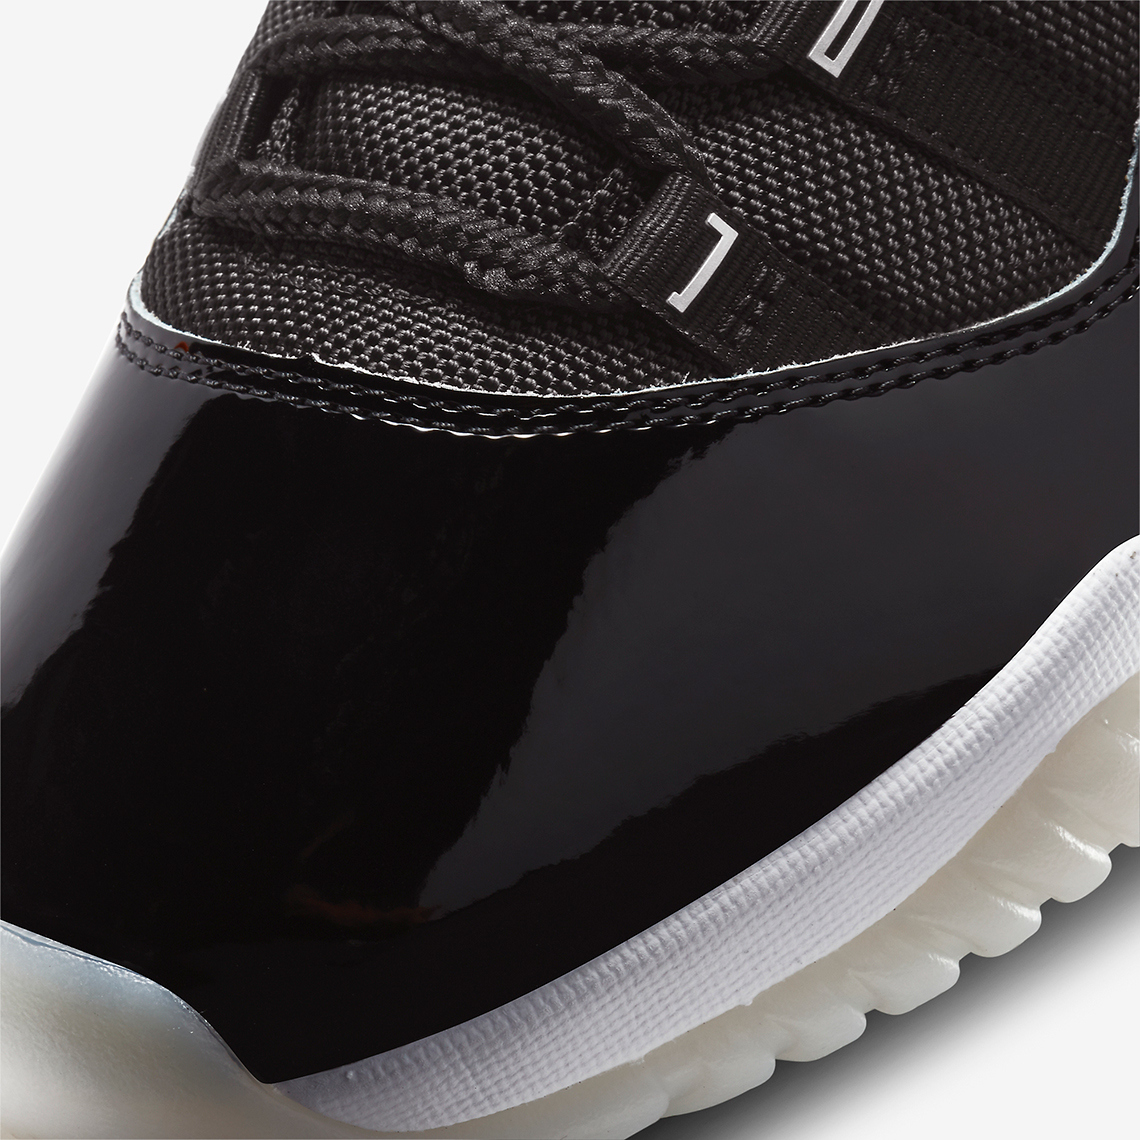 Air Jordan 11 Jubilee Black Silver Release Info | SneakerNews.com